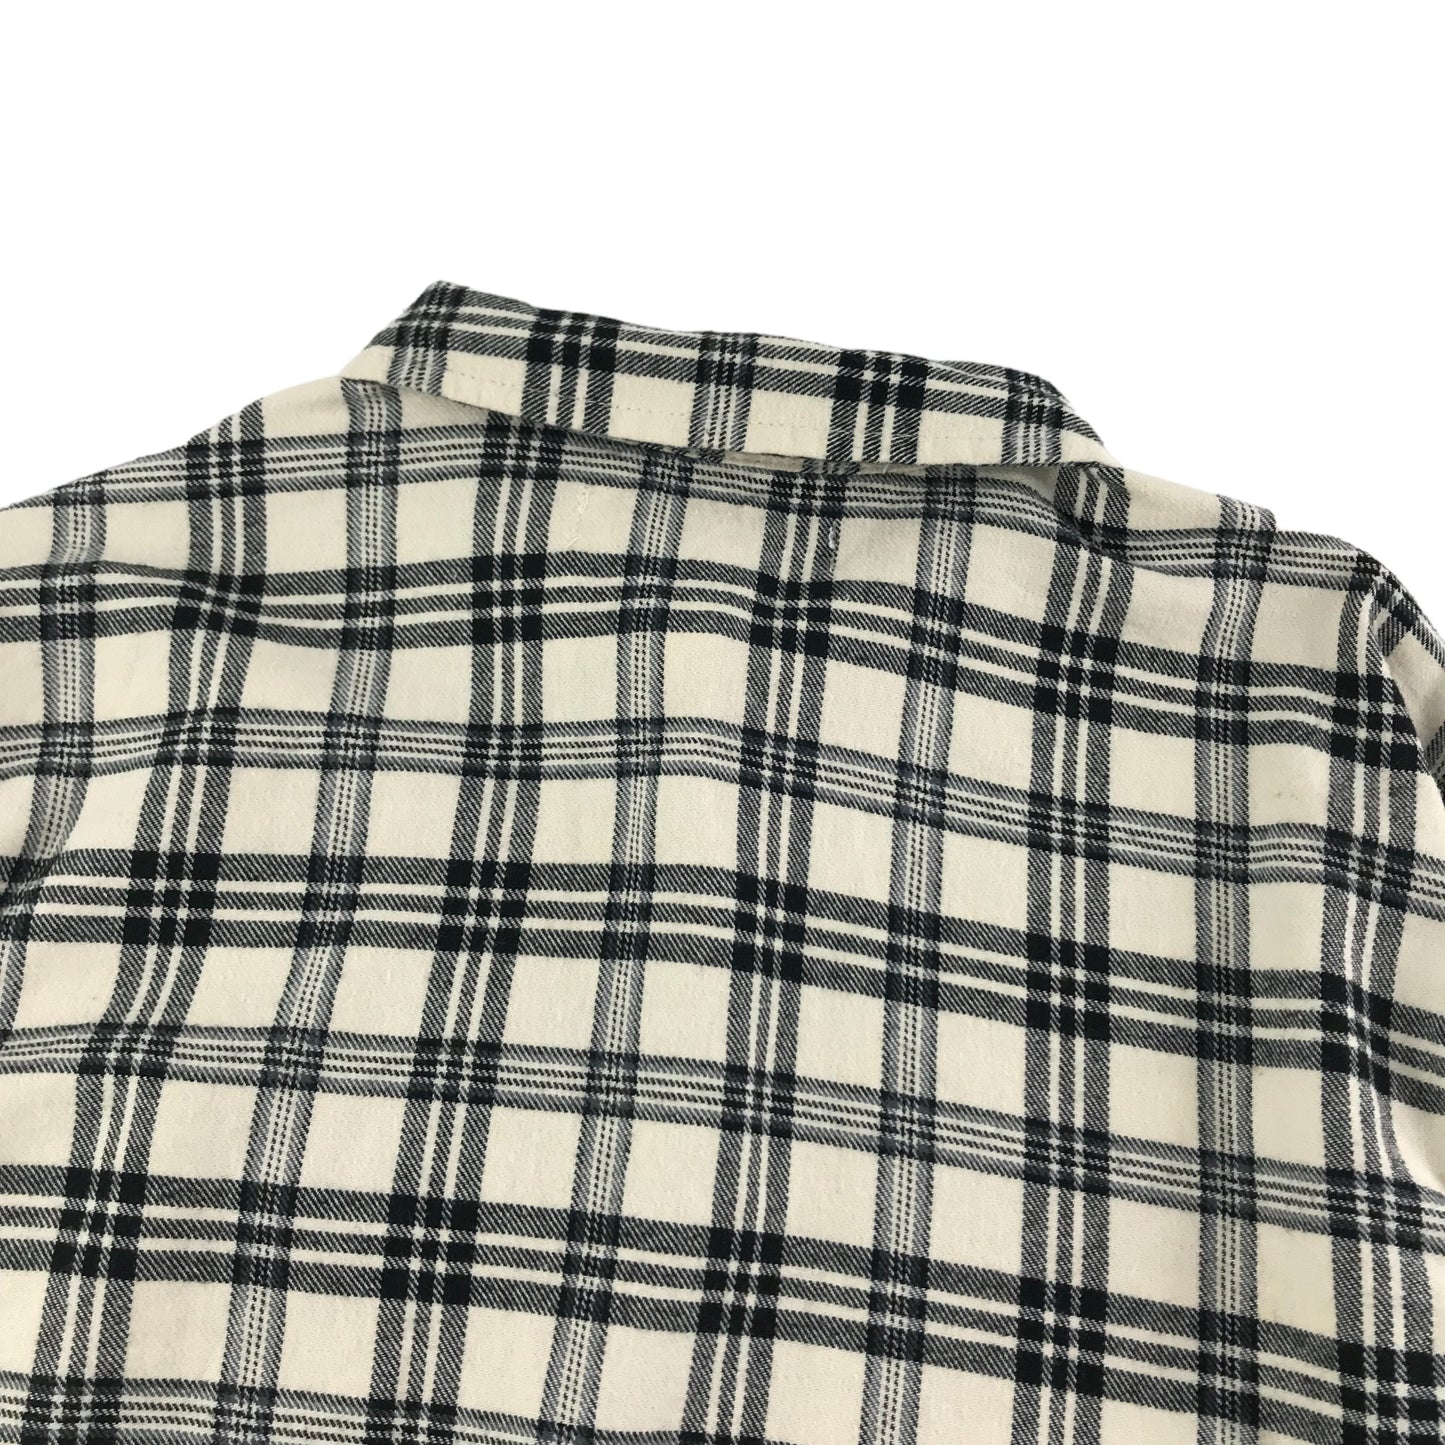 Zara Shirt Age 6 Cream Black Check Pattern Button Up Cotton